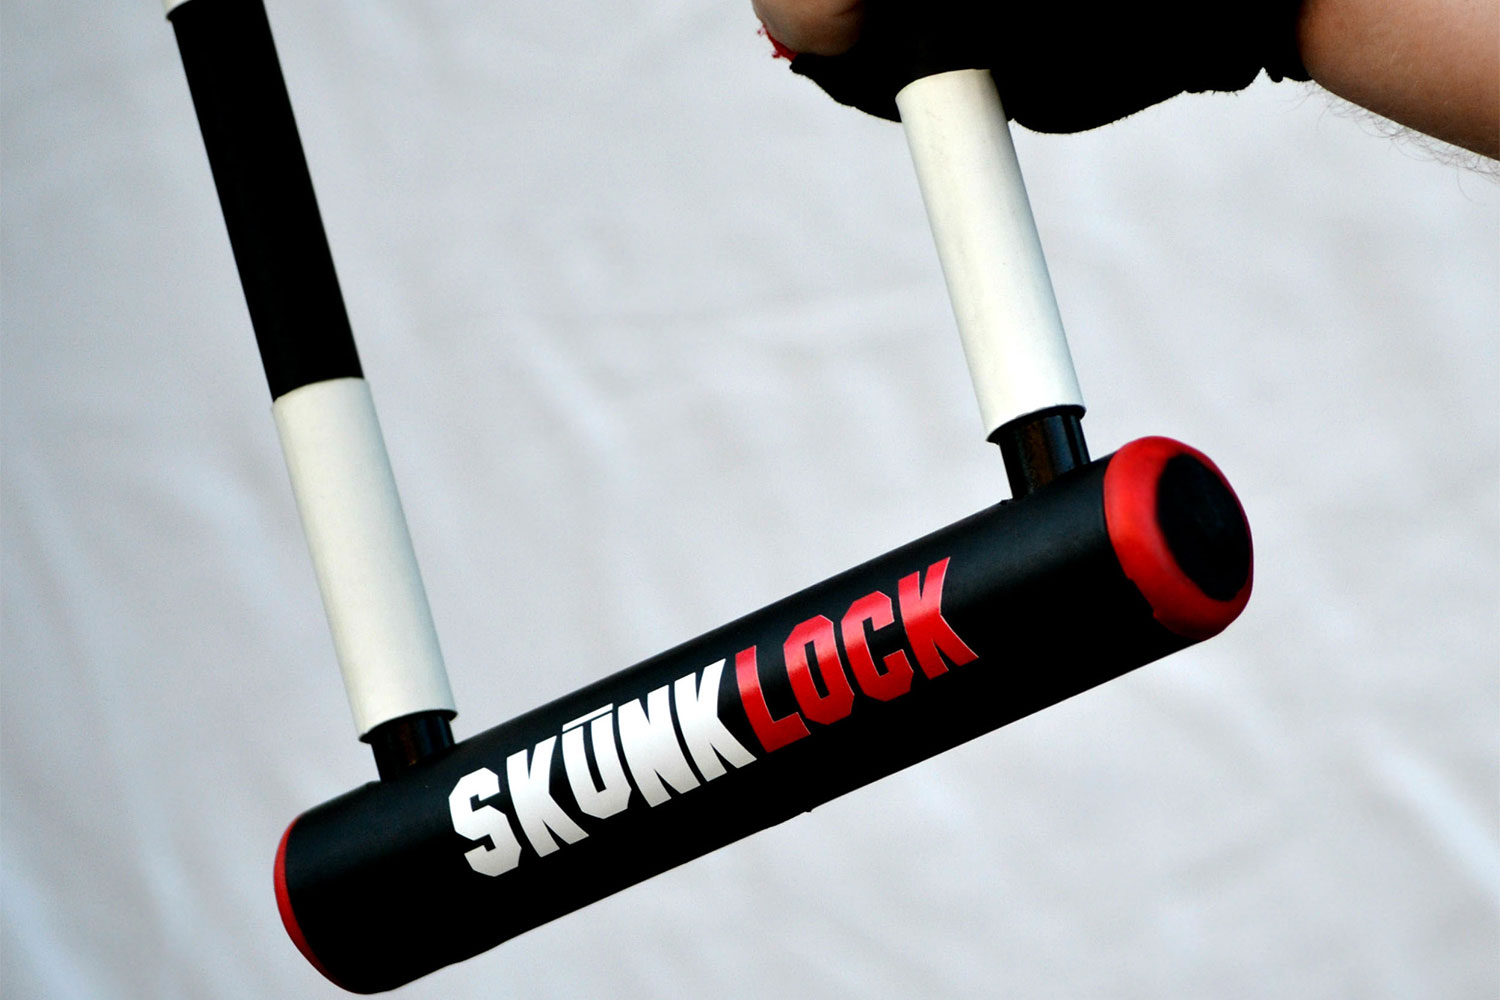 SkunkLock